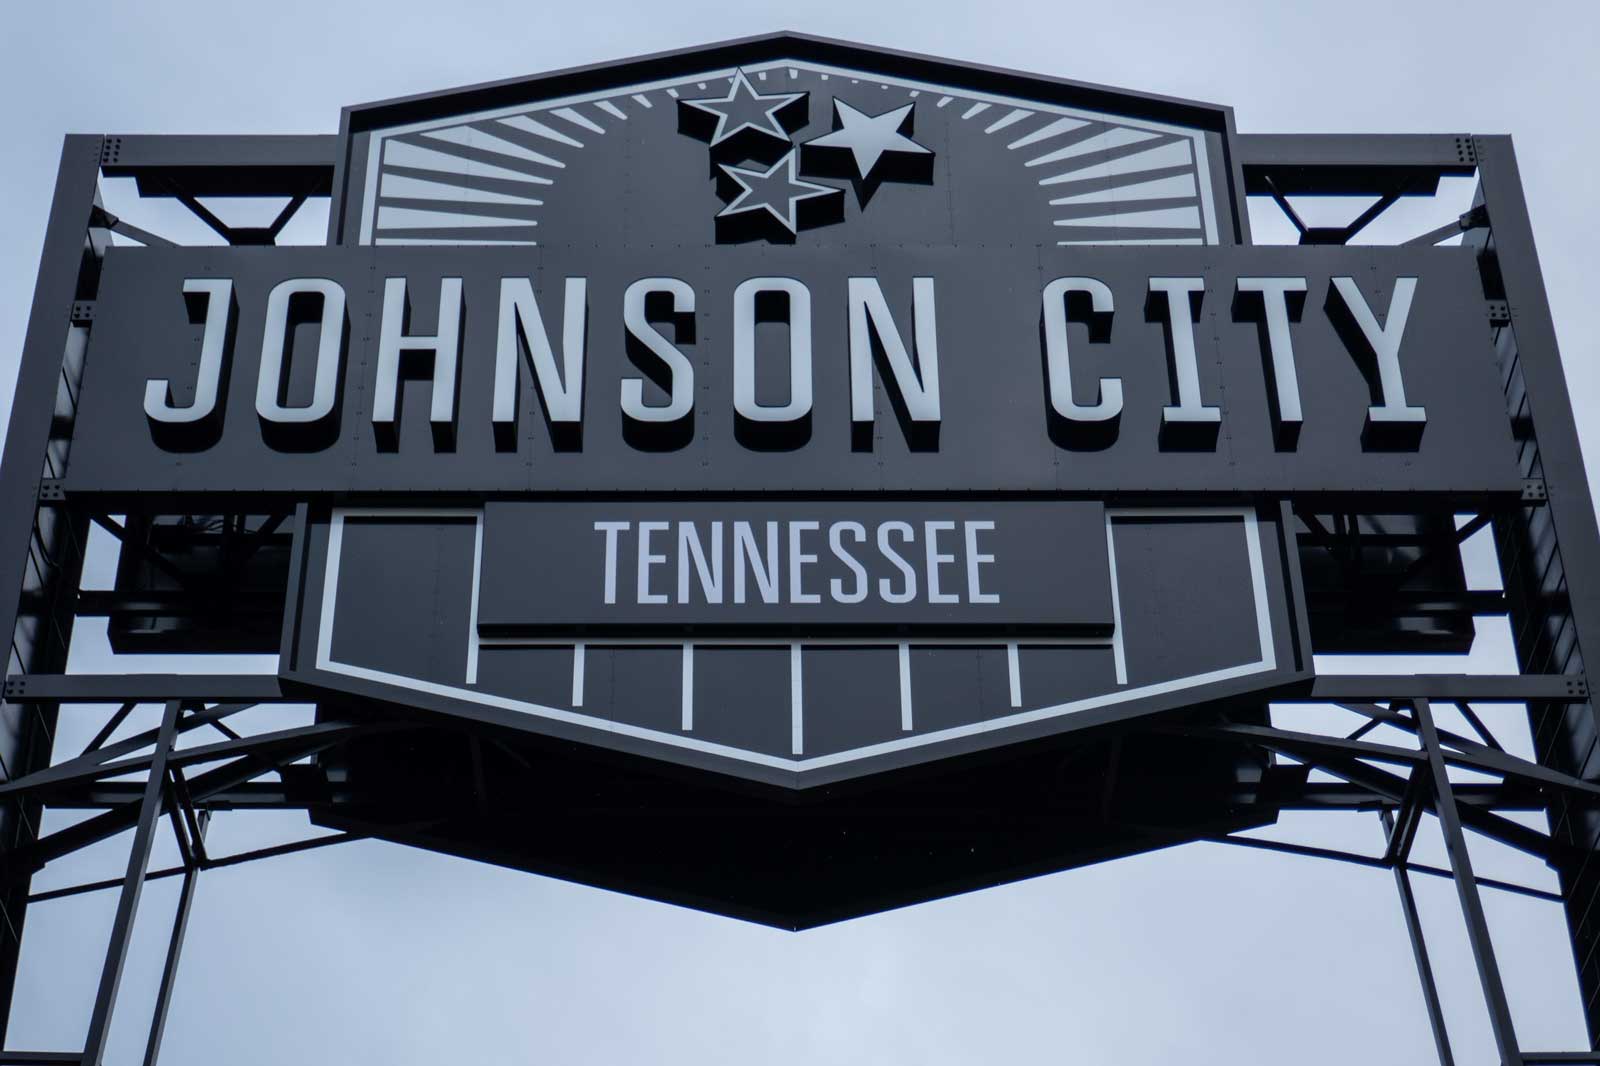  Johnson City Tennessee